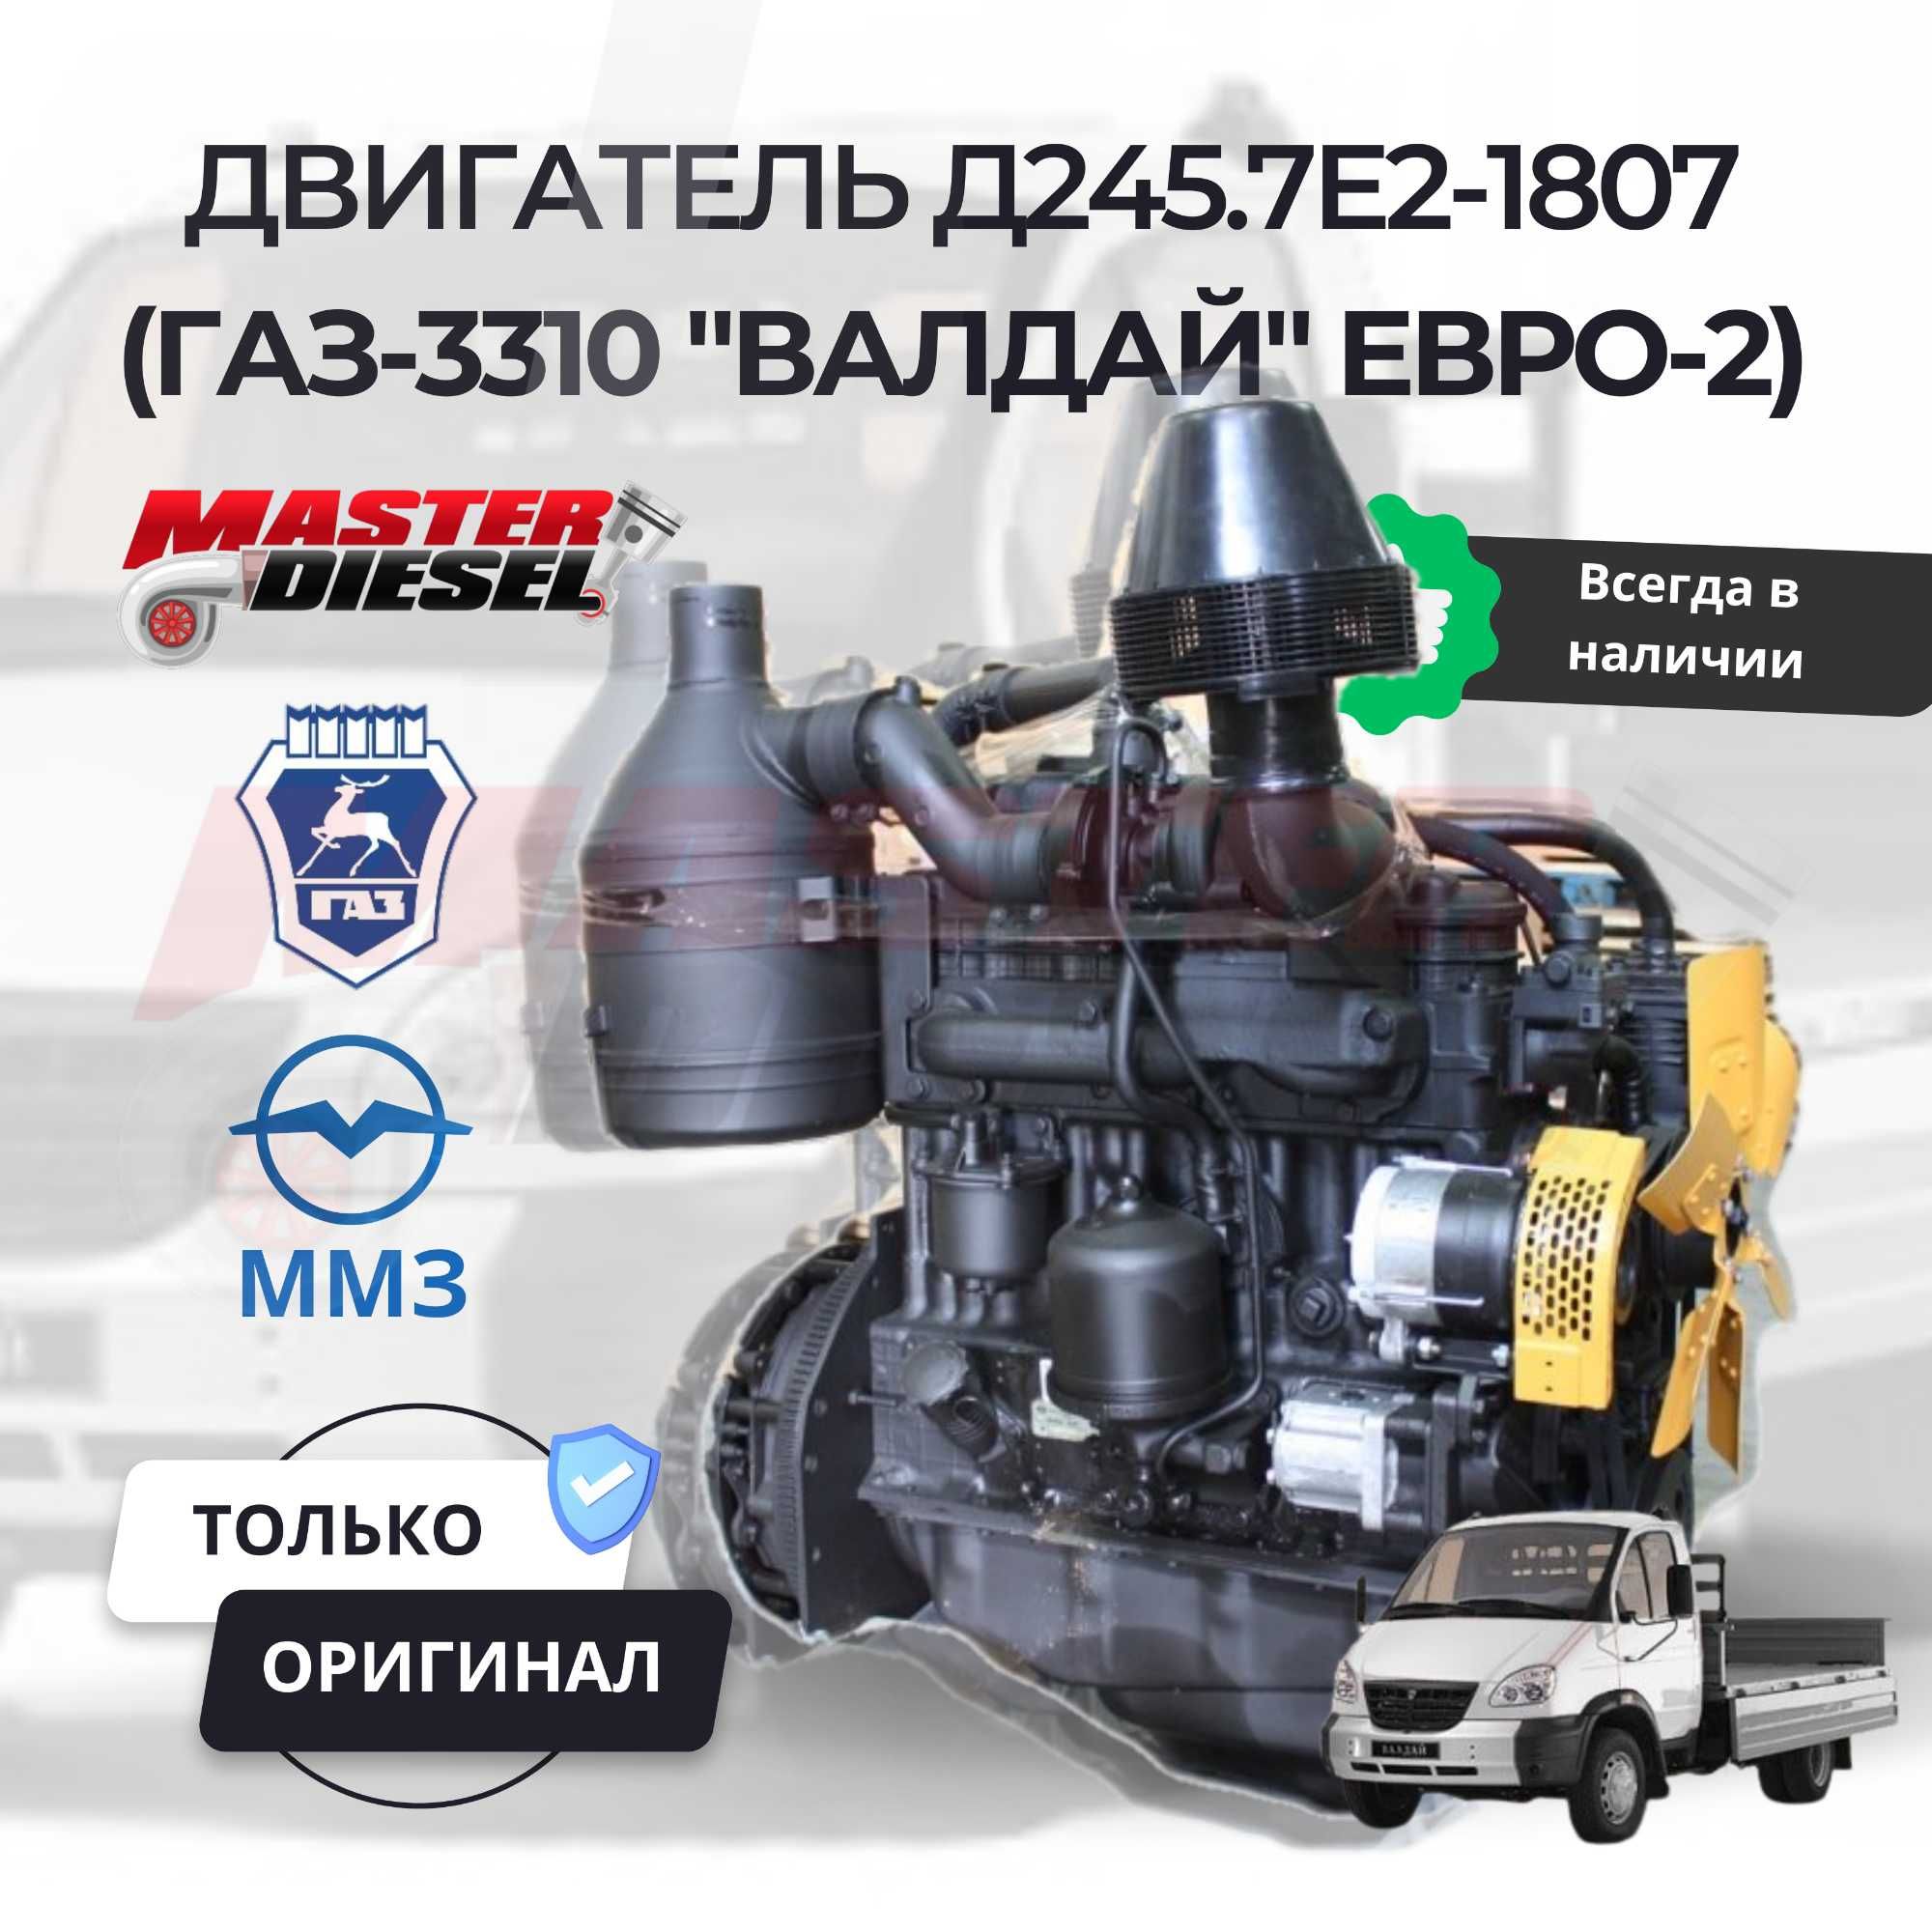 Двигатель Д245.7Е2-1807 (ГАЗ-3310 "Валдай" ЕВРО-2)